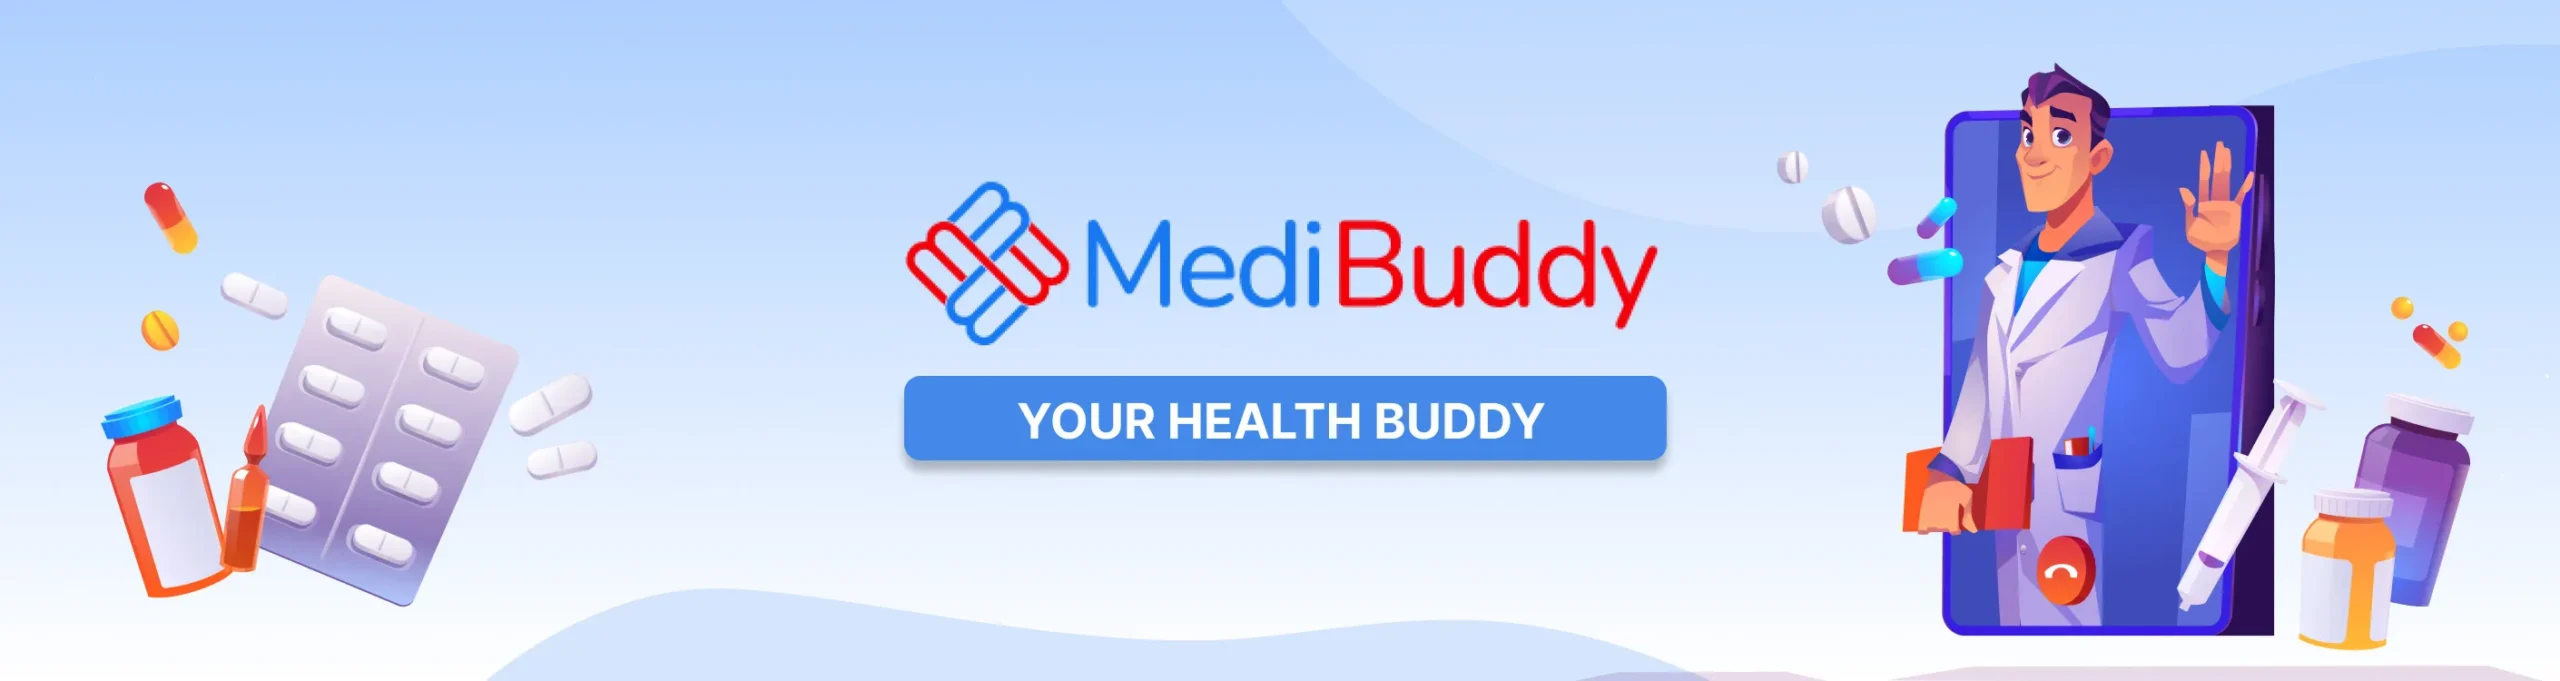 Medi Buddy - Surgical Care : Get Upto 65% OFF